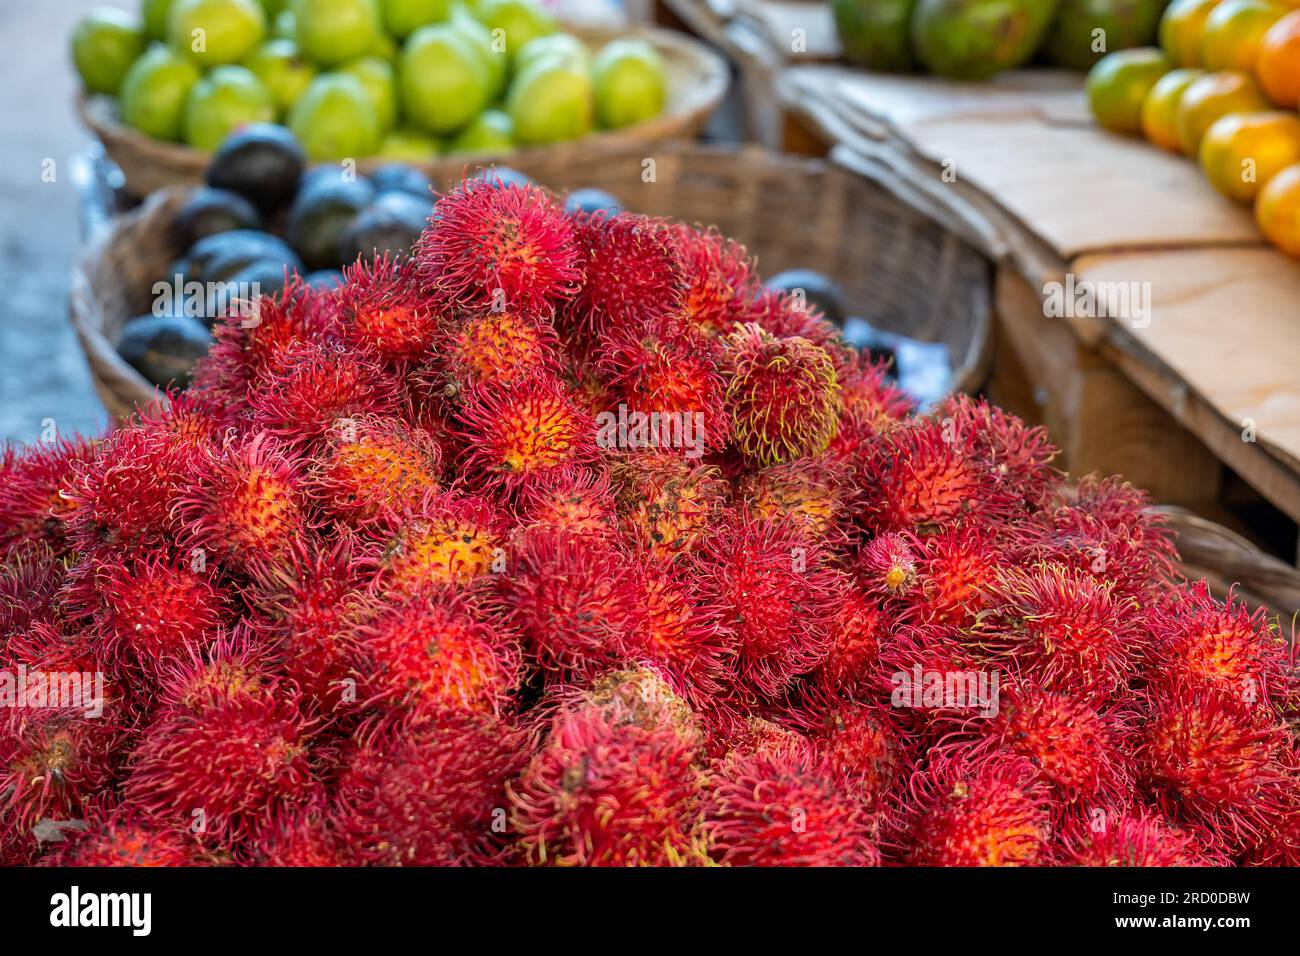 Bunch of Ripe Rambutan (Nephelium lappaceum) A Fruit Native to Southeast Asia on a Stall in Colorful Market 'Mercado Mayoreo' Near the National Stadiu Stock Photo